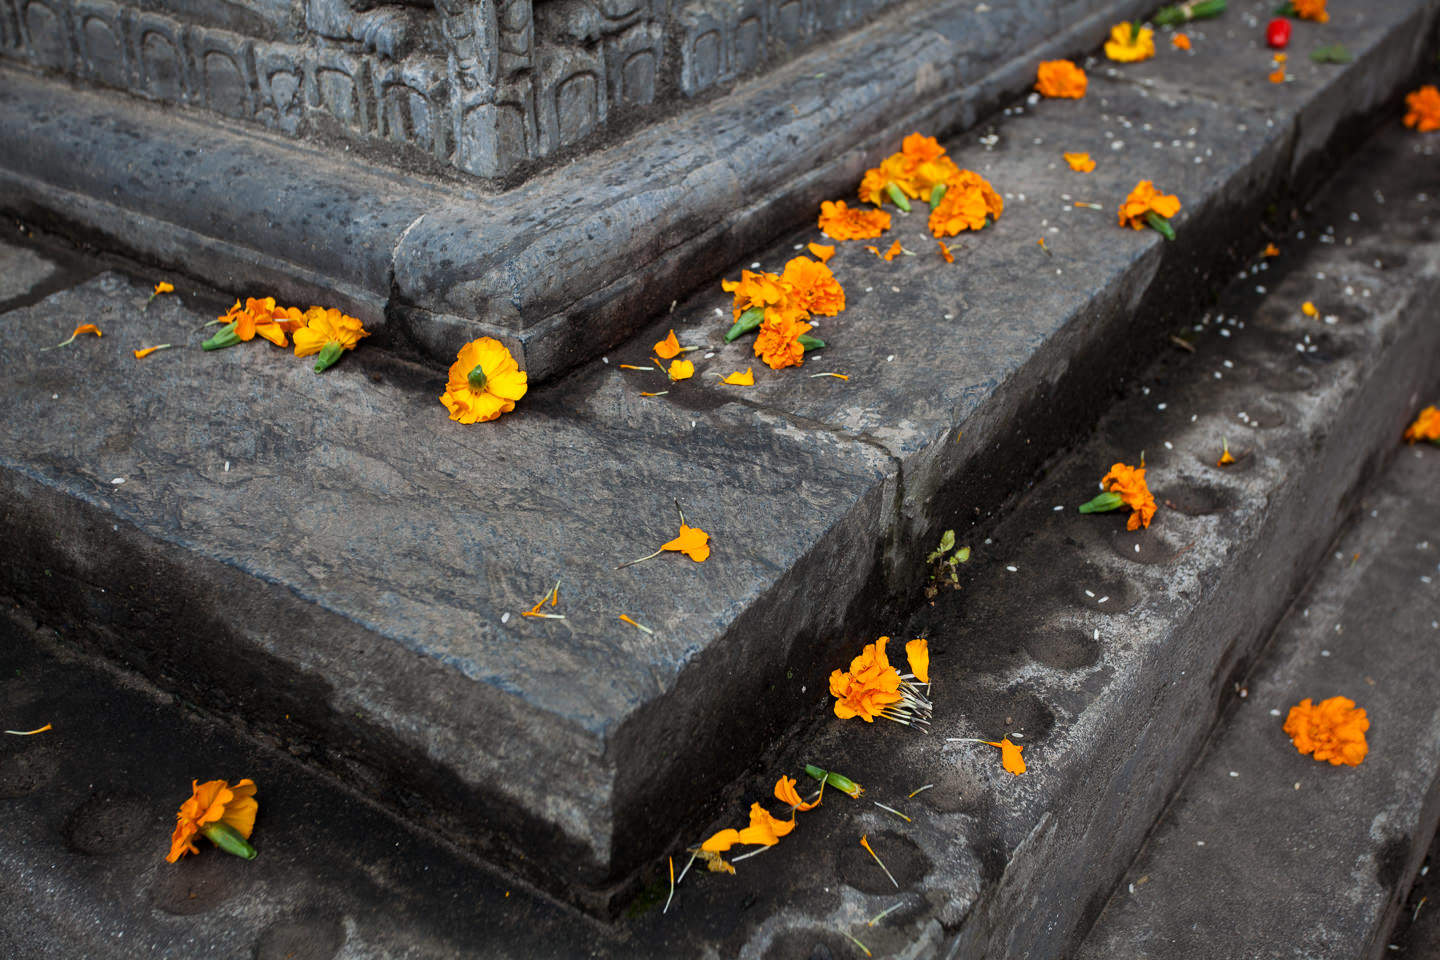 On the steps of the Monkey Temple in Kathmandu Nepal.